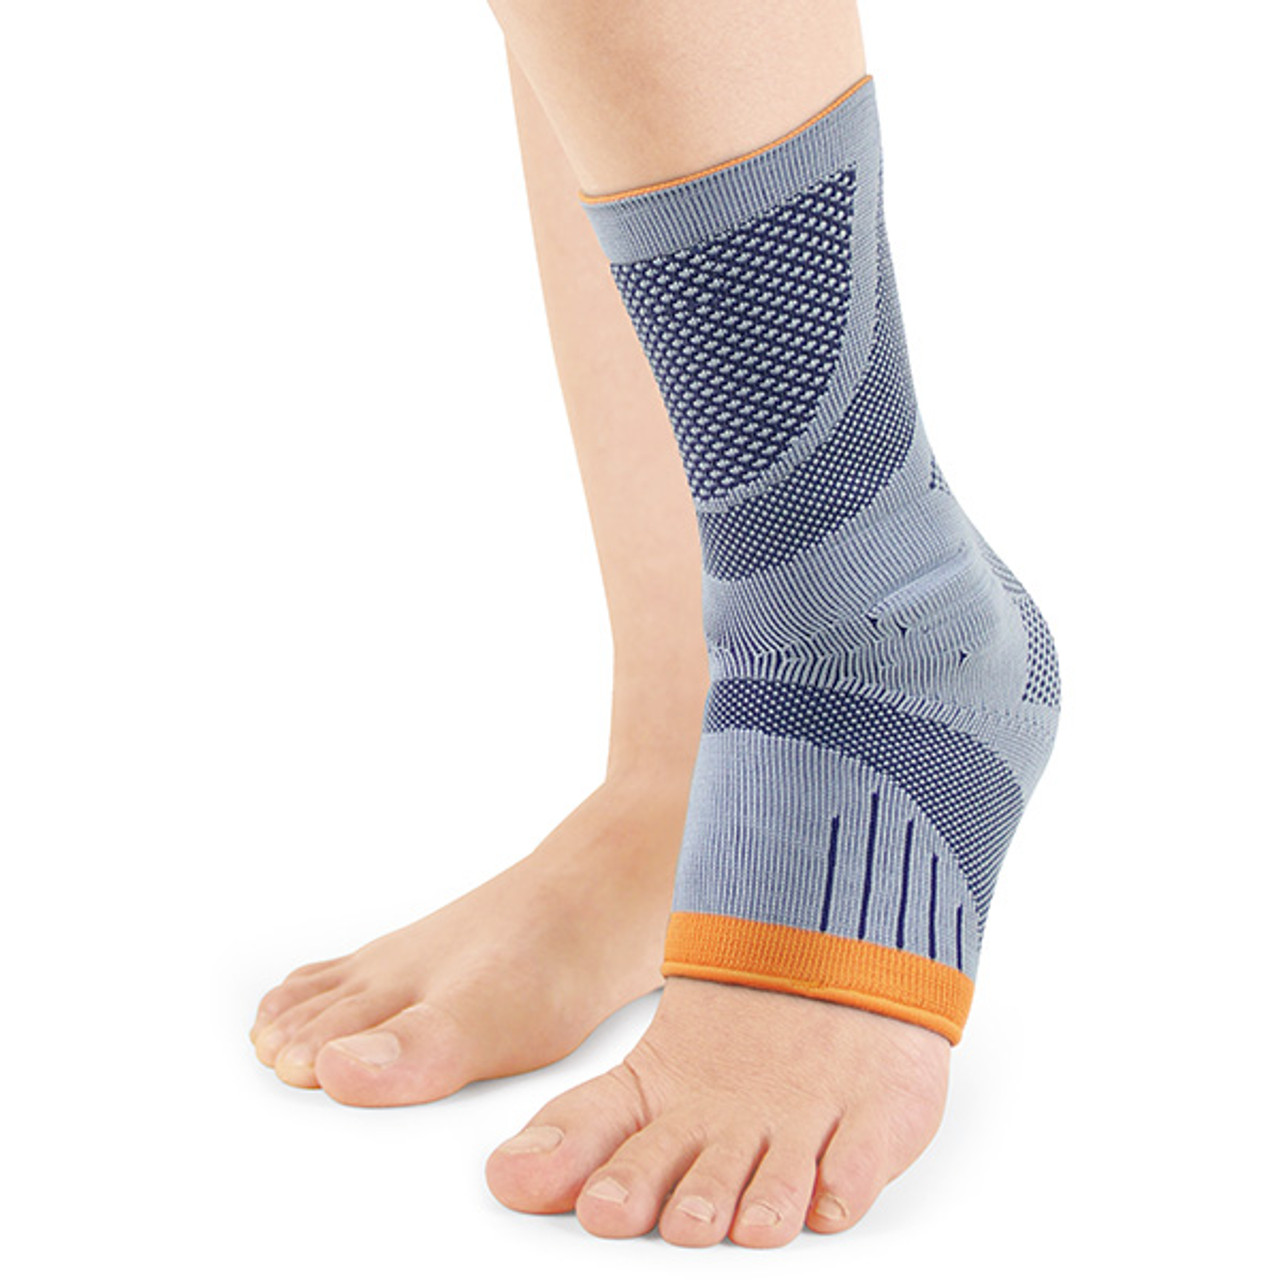 Orthoactive 5571 3D Elastic Ankle Support Medium